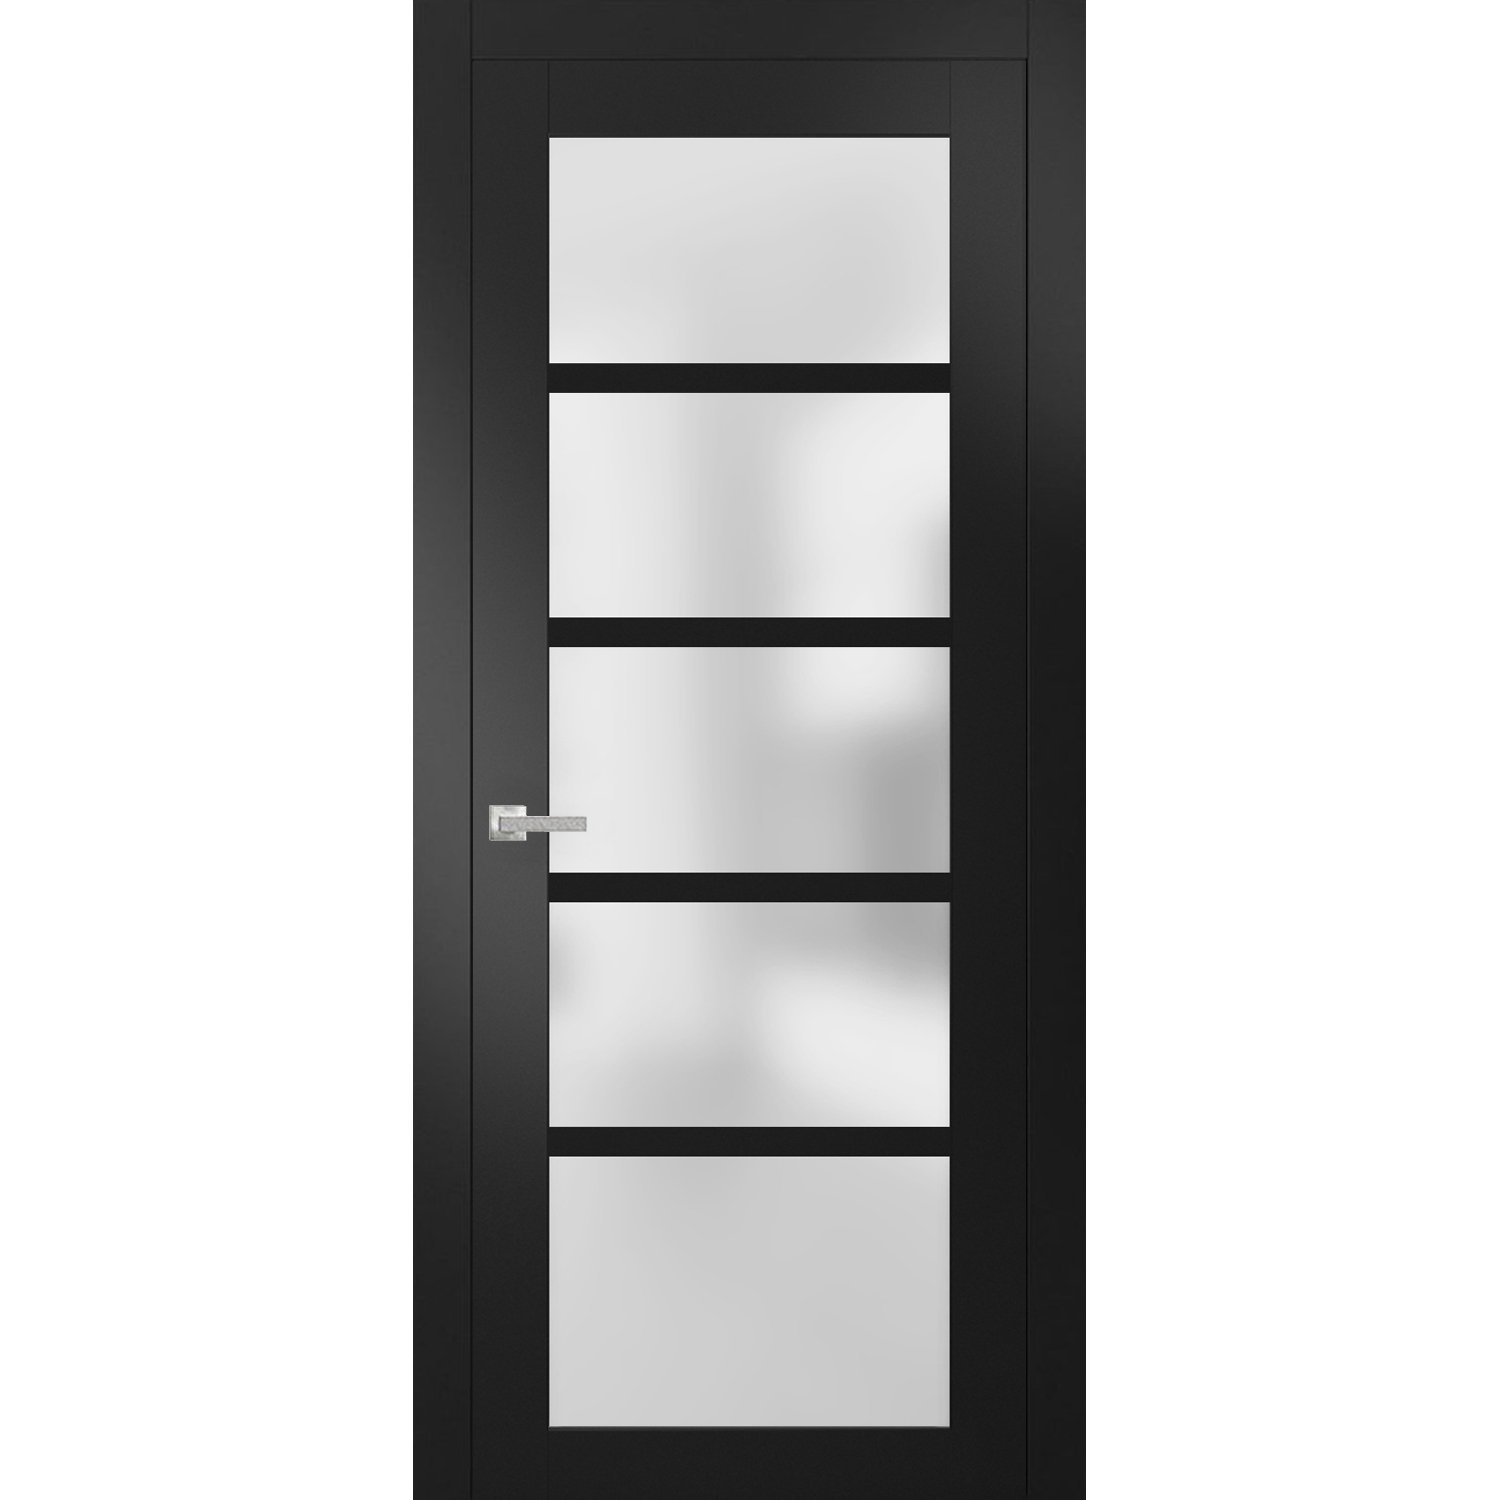 Solid French Door Frosted Glass | Quadro 4002 Matte Black | Single Regular Panel Frame Trims Handle | Bathroom Bedroom Sturdy Doors 